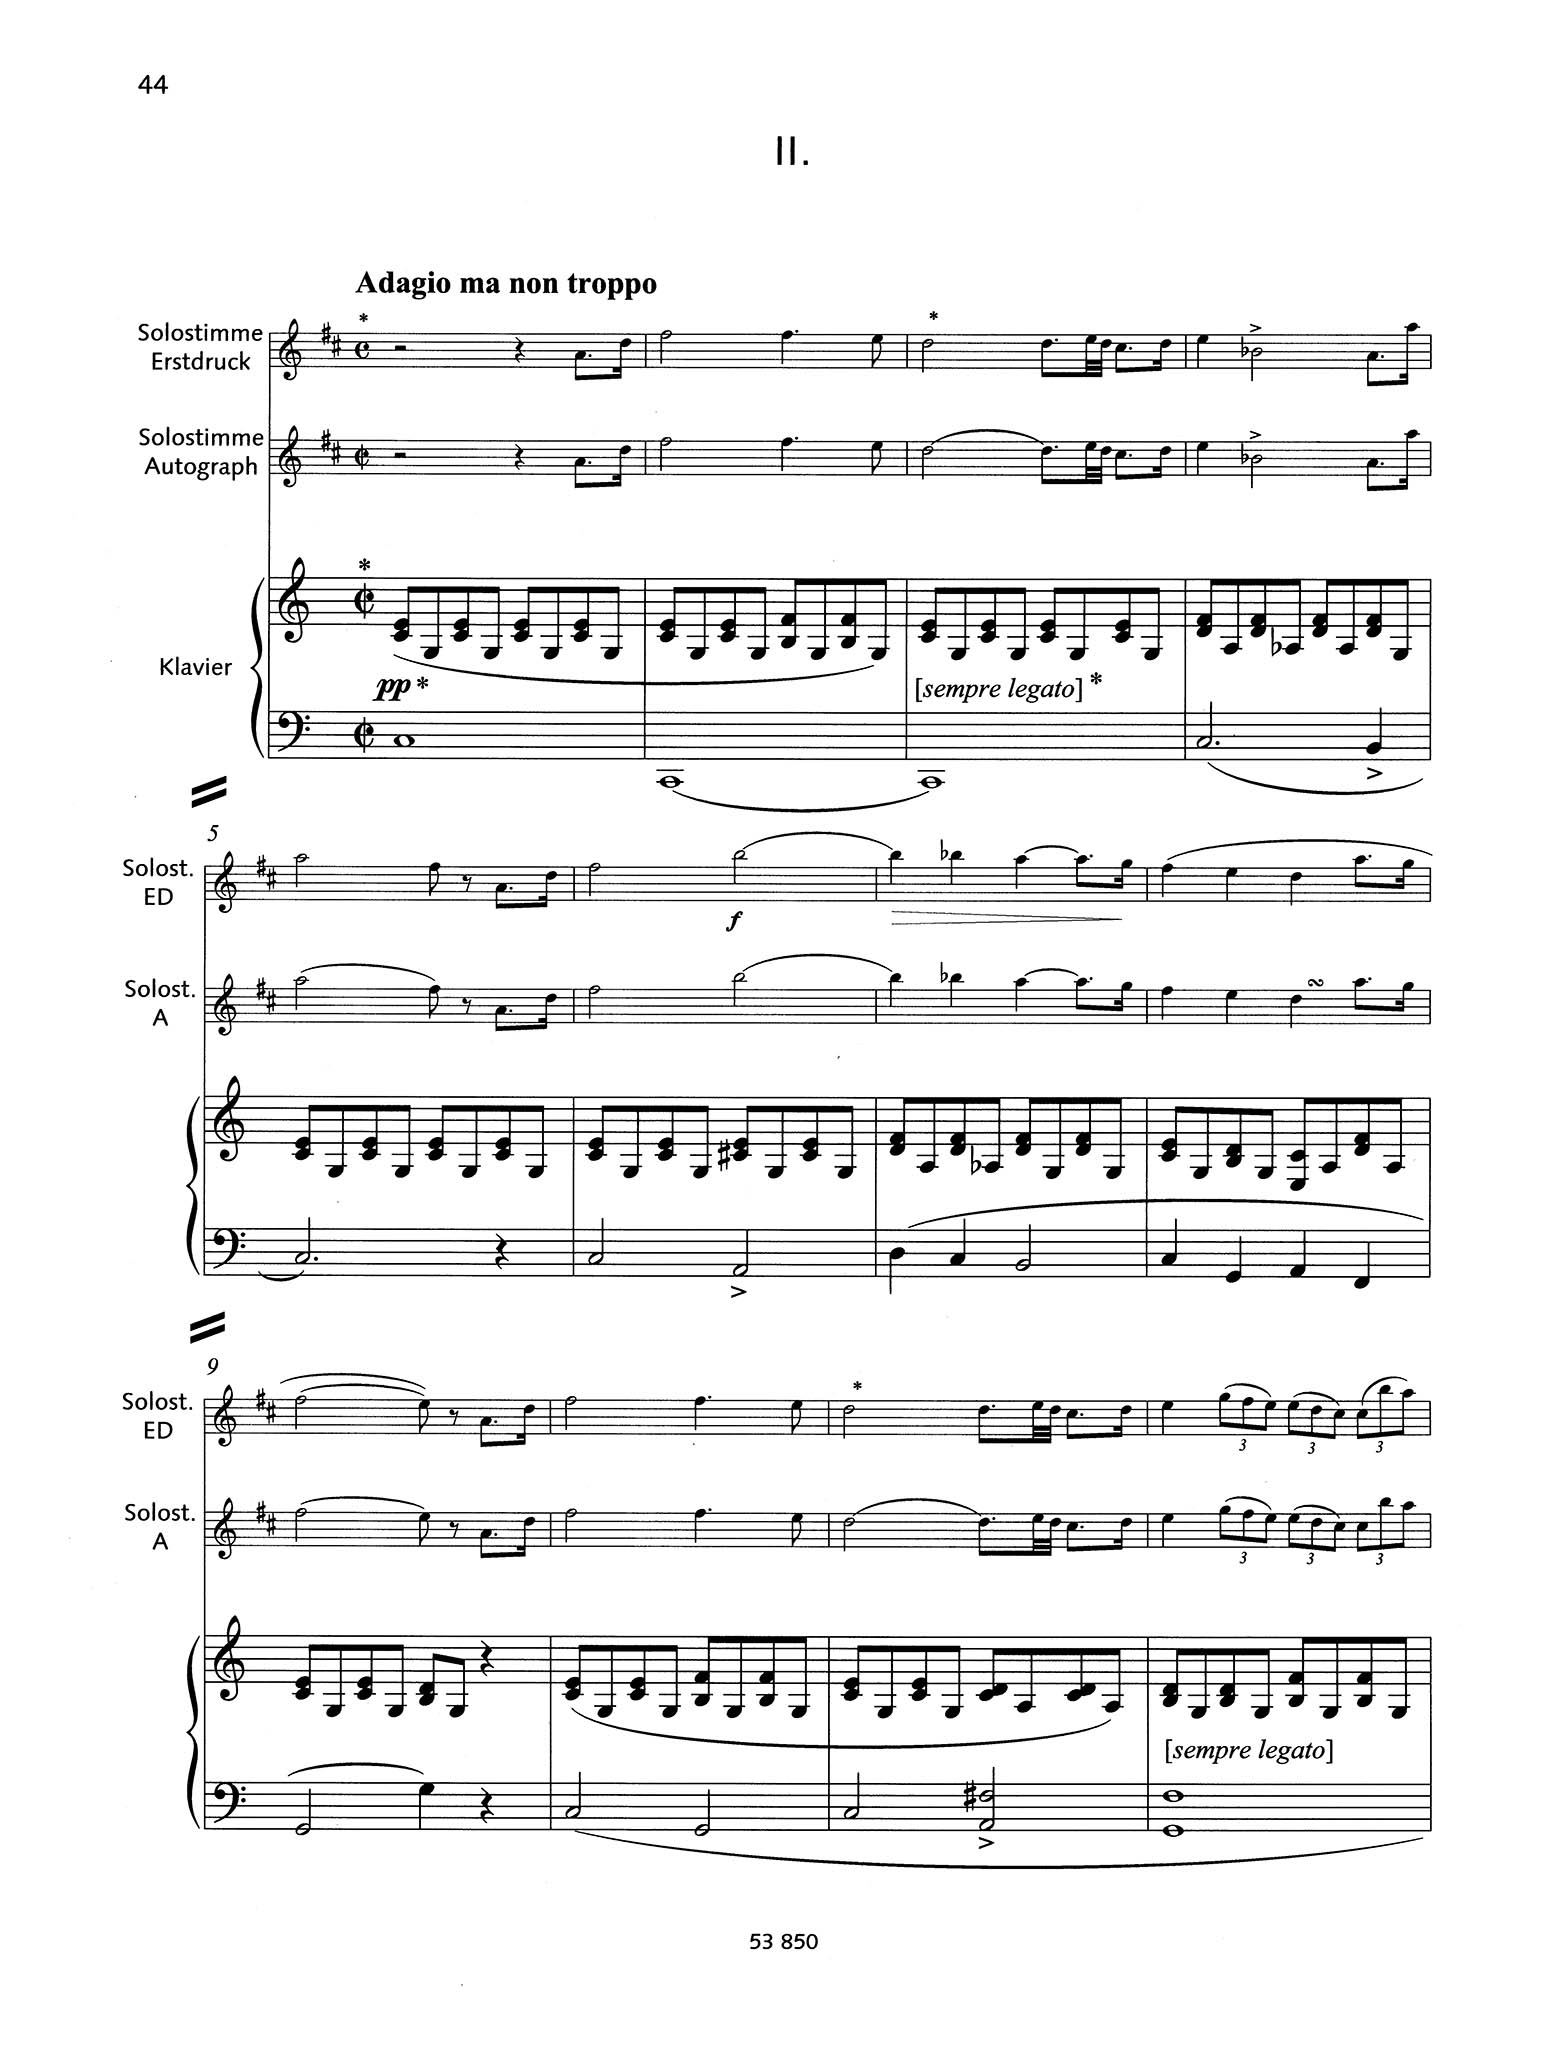 Clarinet Concerto No. 1 in F Minor, Op. 73 - Movement 2